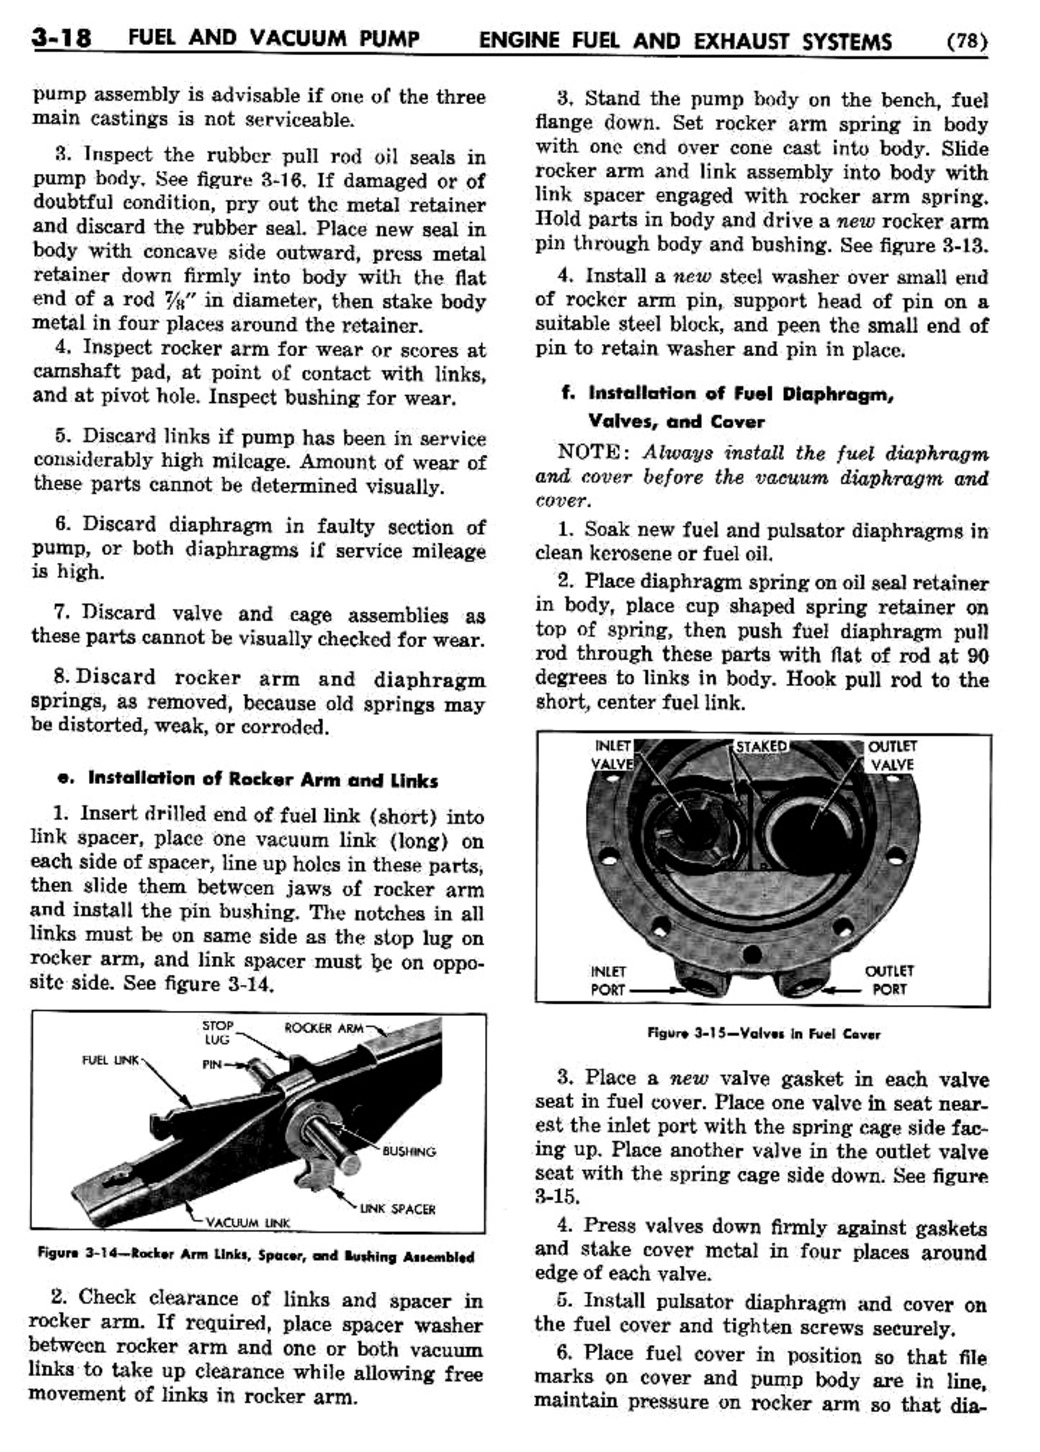 n_04 1956 Buick Shop Manual - Engine Fuel & Exhaust-018-018.jpg